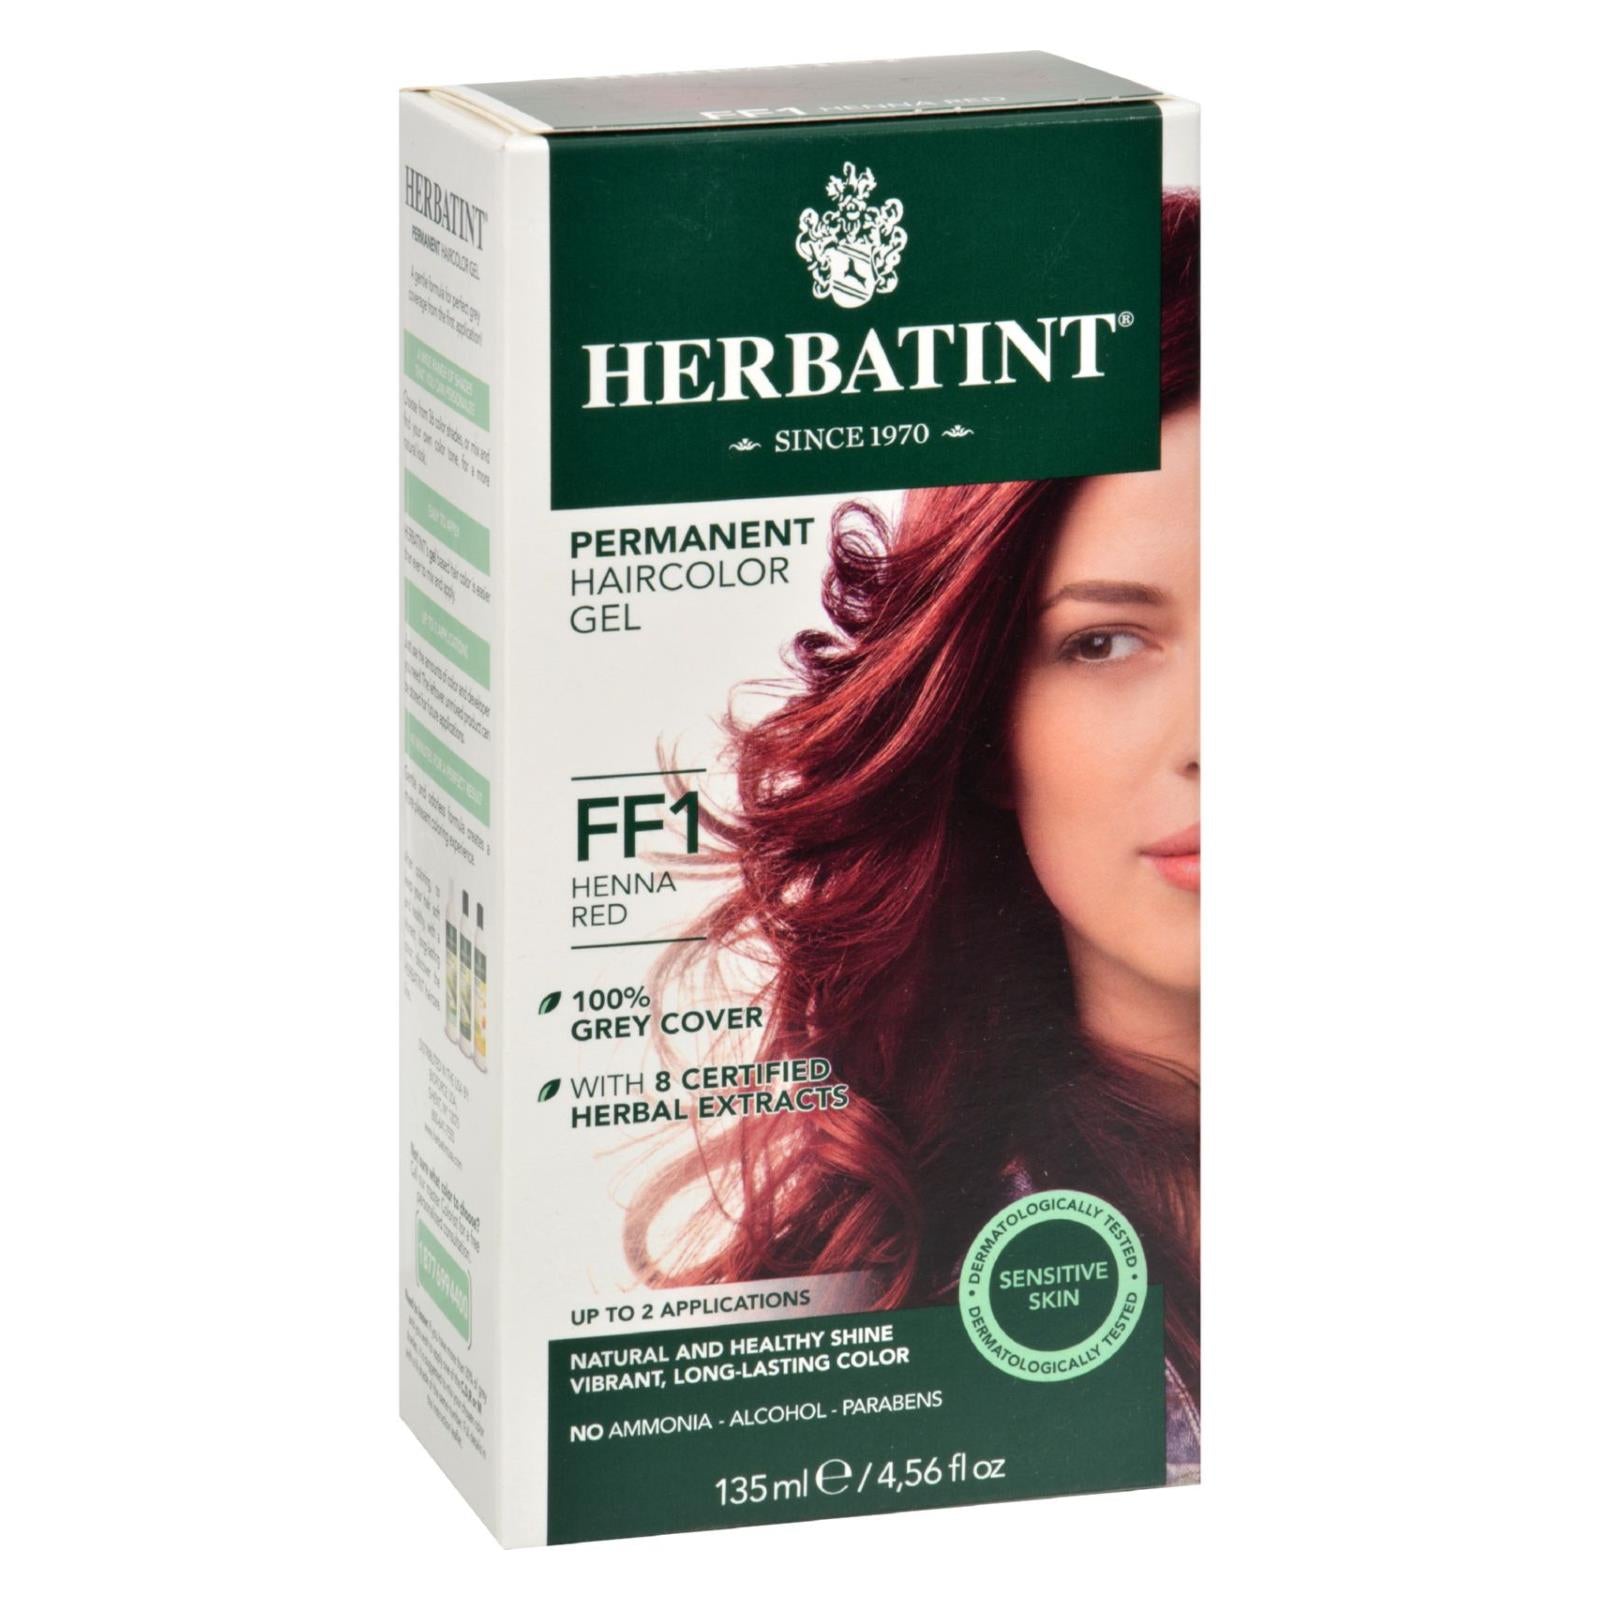 Herbatint Haircolor Kit Flash Fashion Henna Red Ff1 - 1 Kit | OnlyNaturals.us